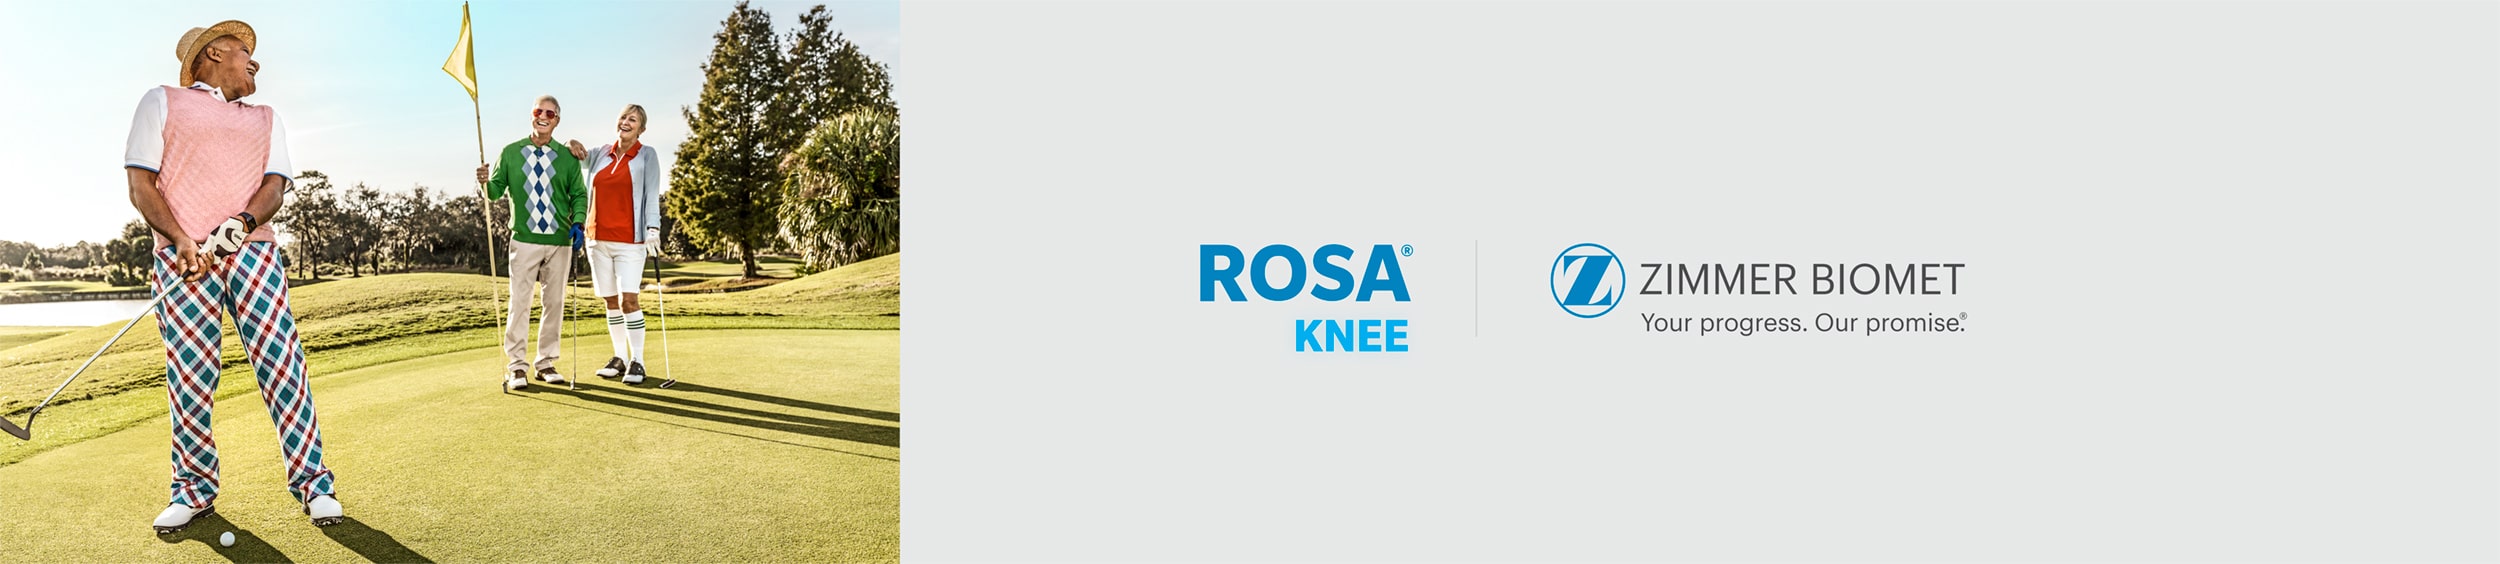 Rosa Knee | Zimmer Biomet logos